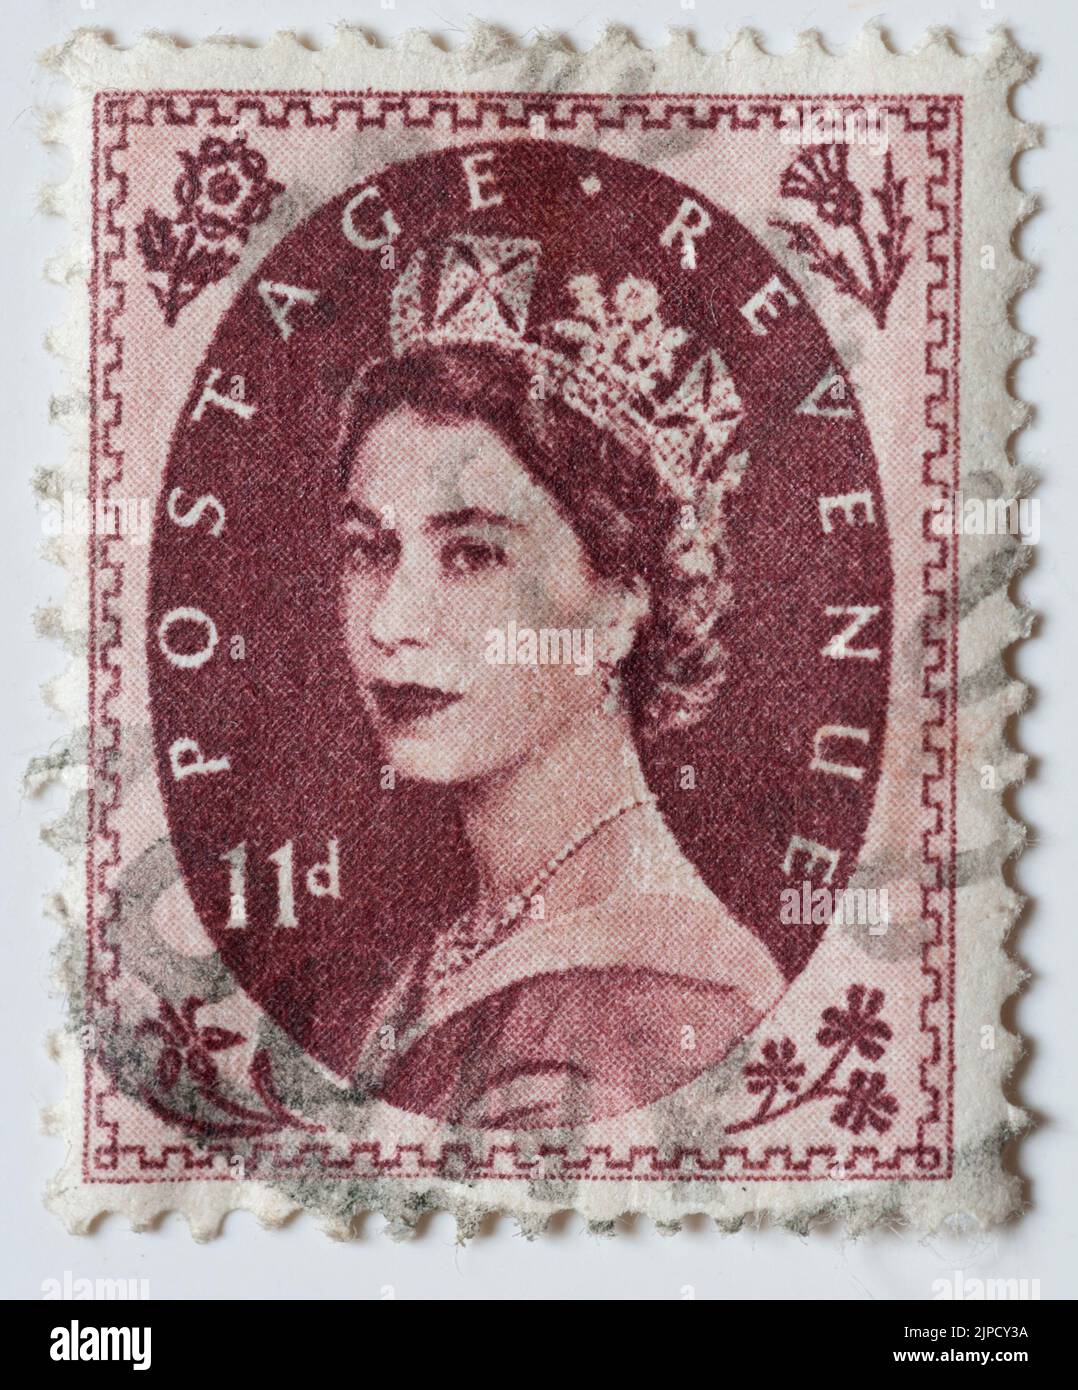 Pre-decimal ER eleven pence postage stamp, UK. Stock Photo